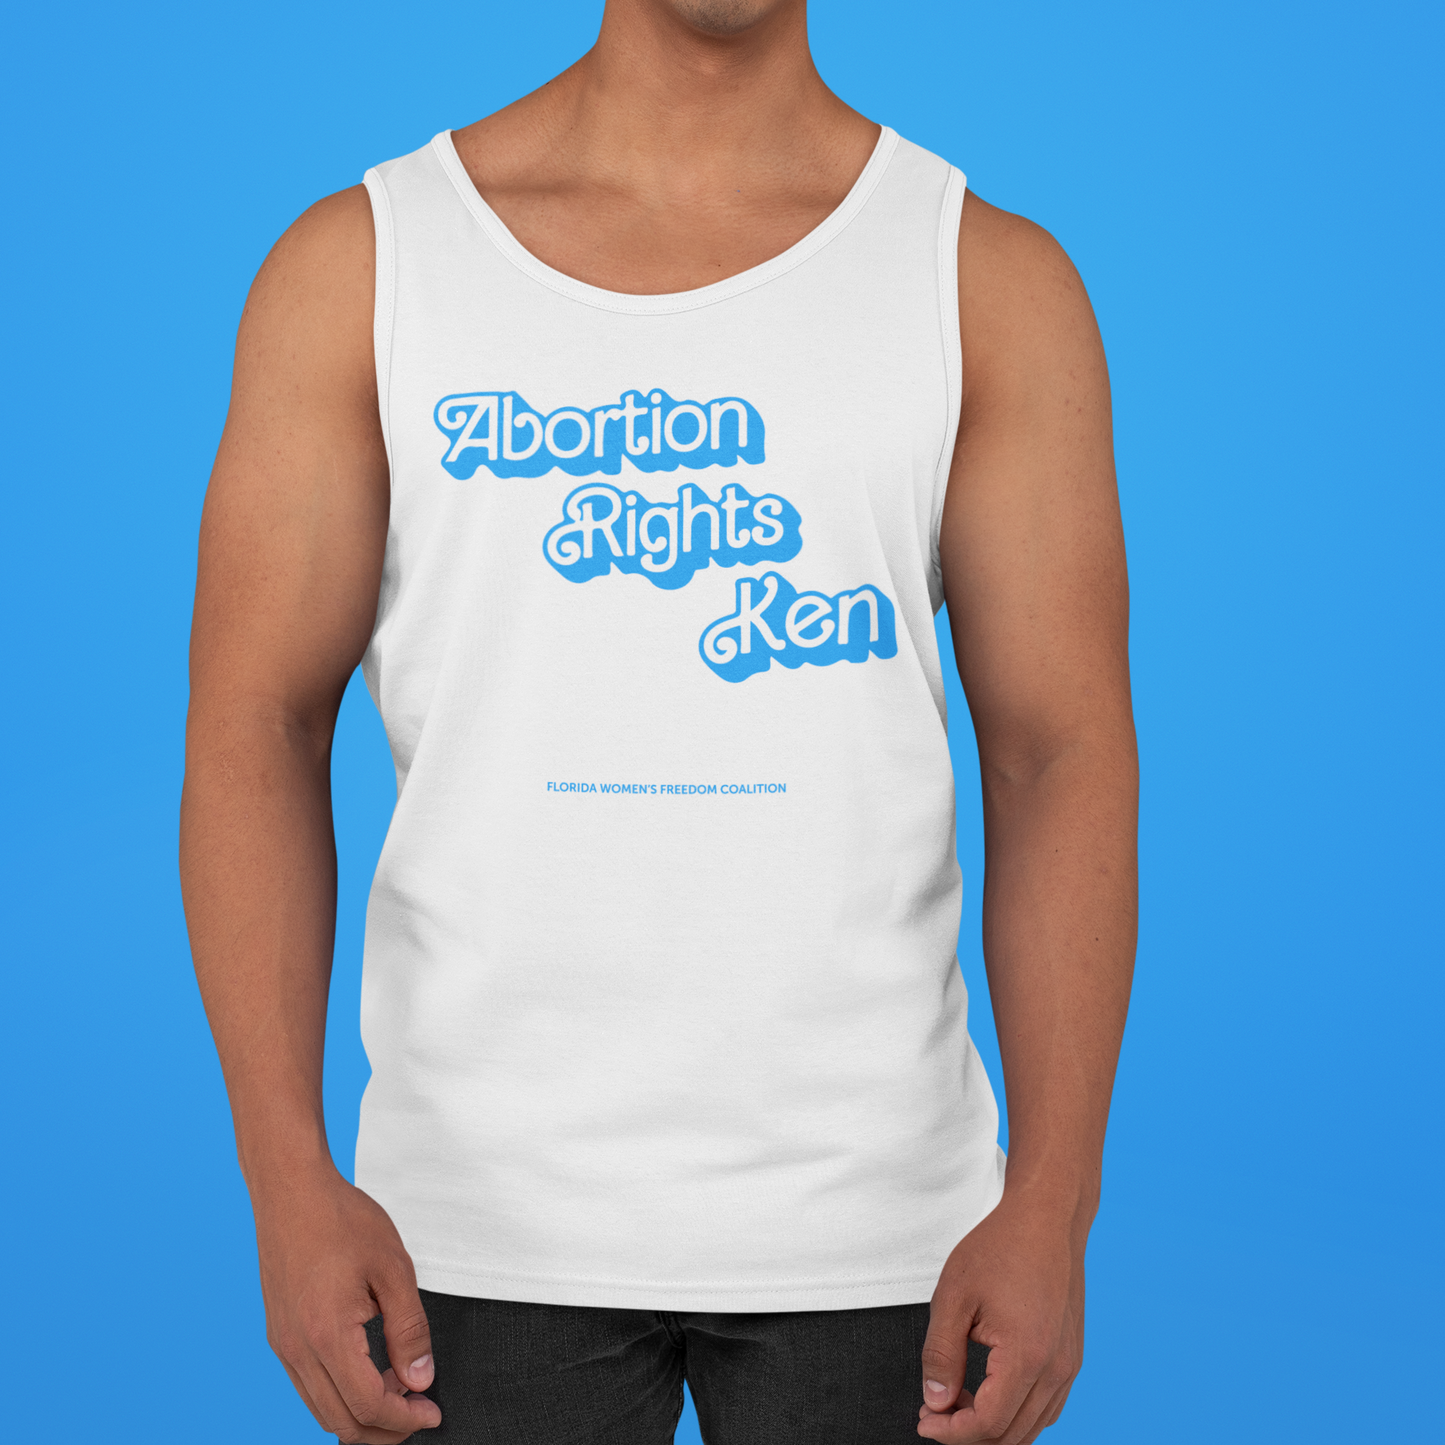 Abortion Rights Ken Shirts Tank Top